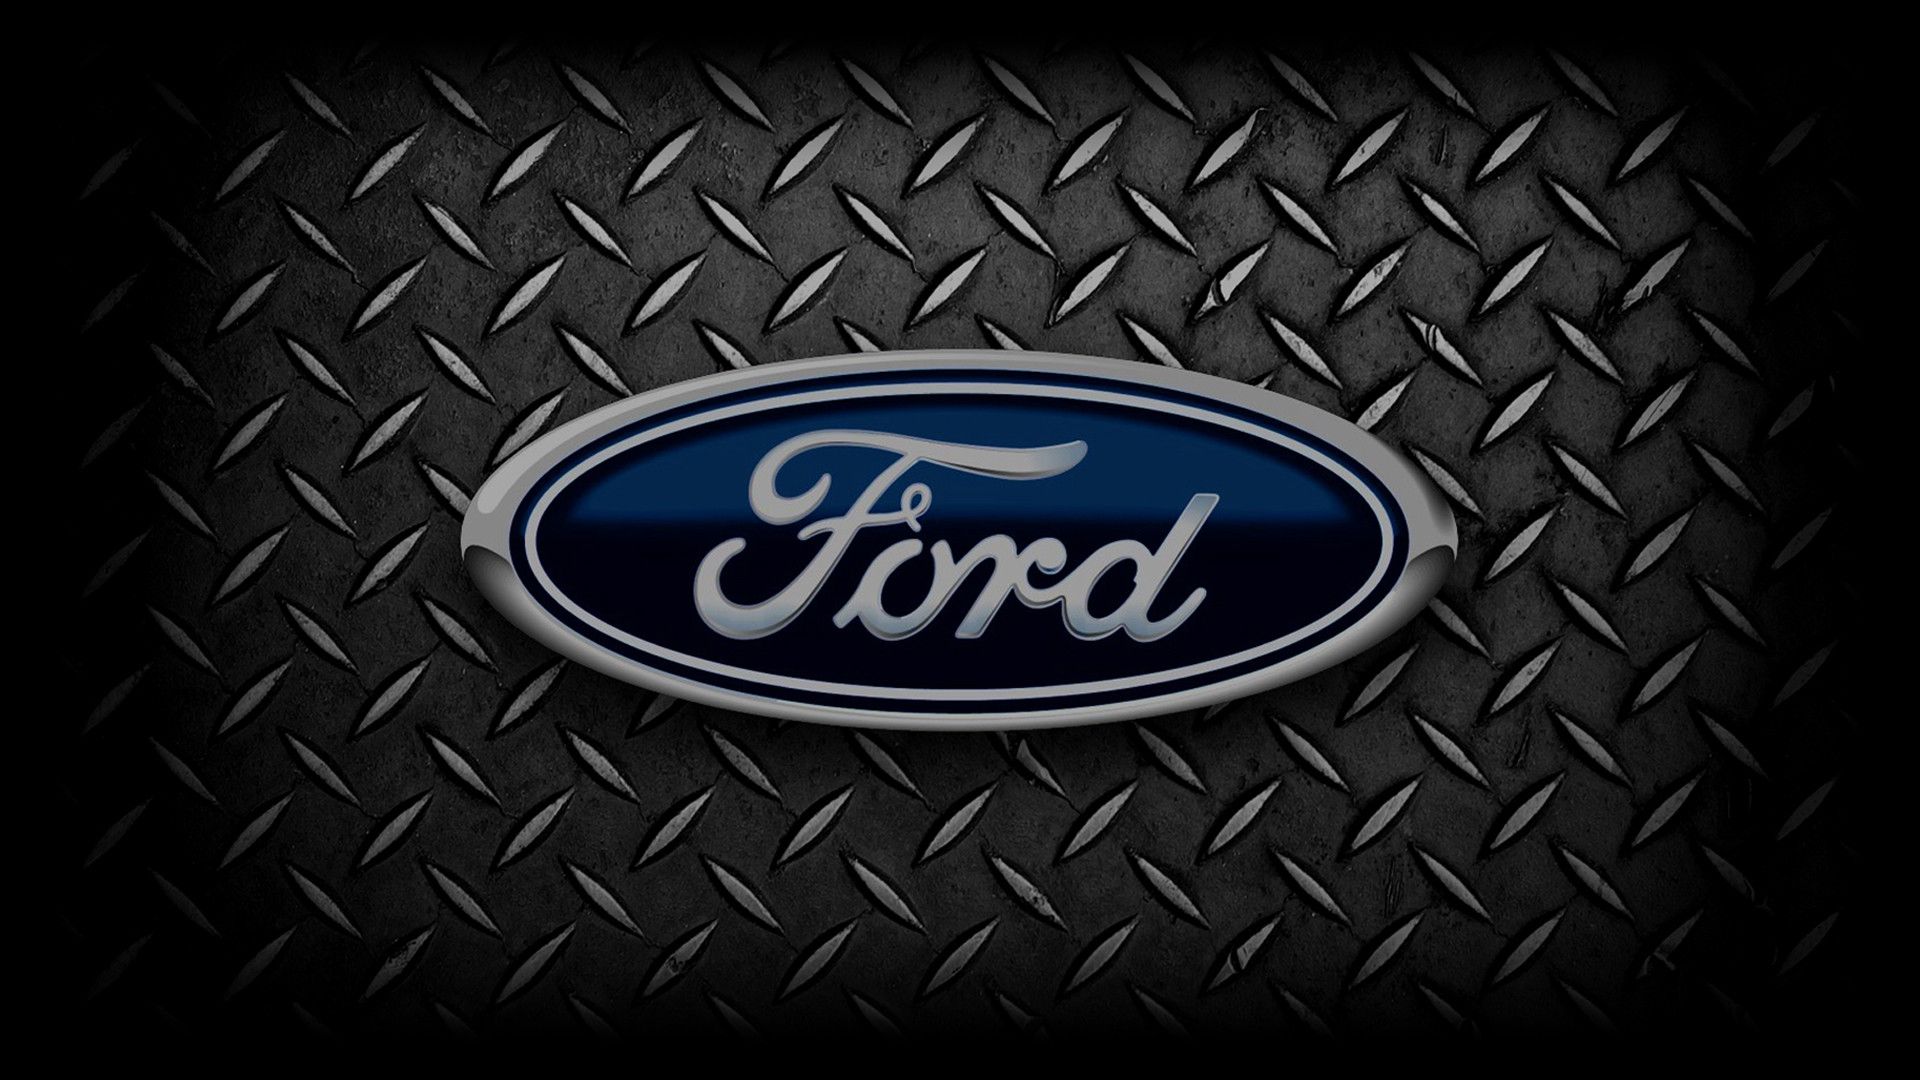 Ford Car Brand Logo Background Wallpaper